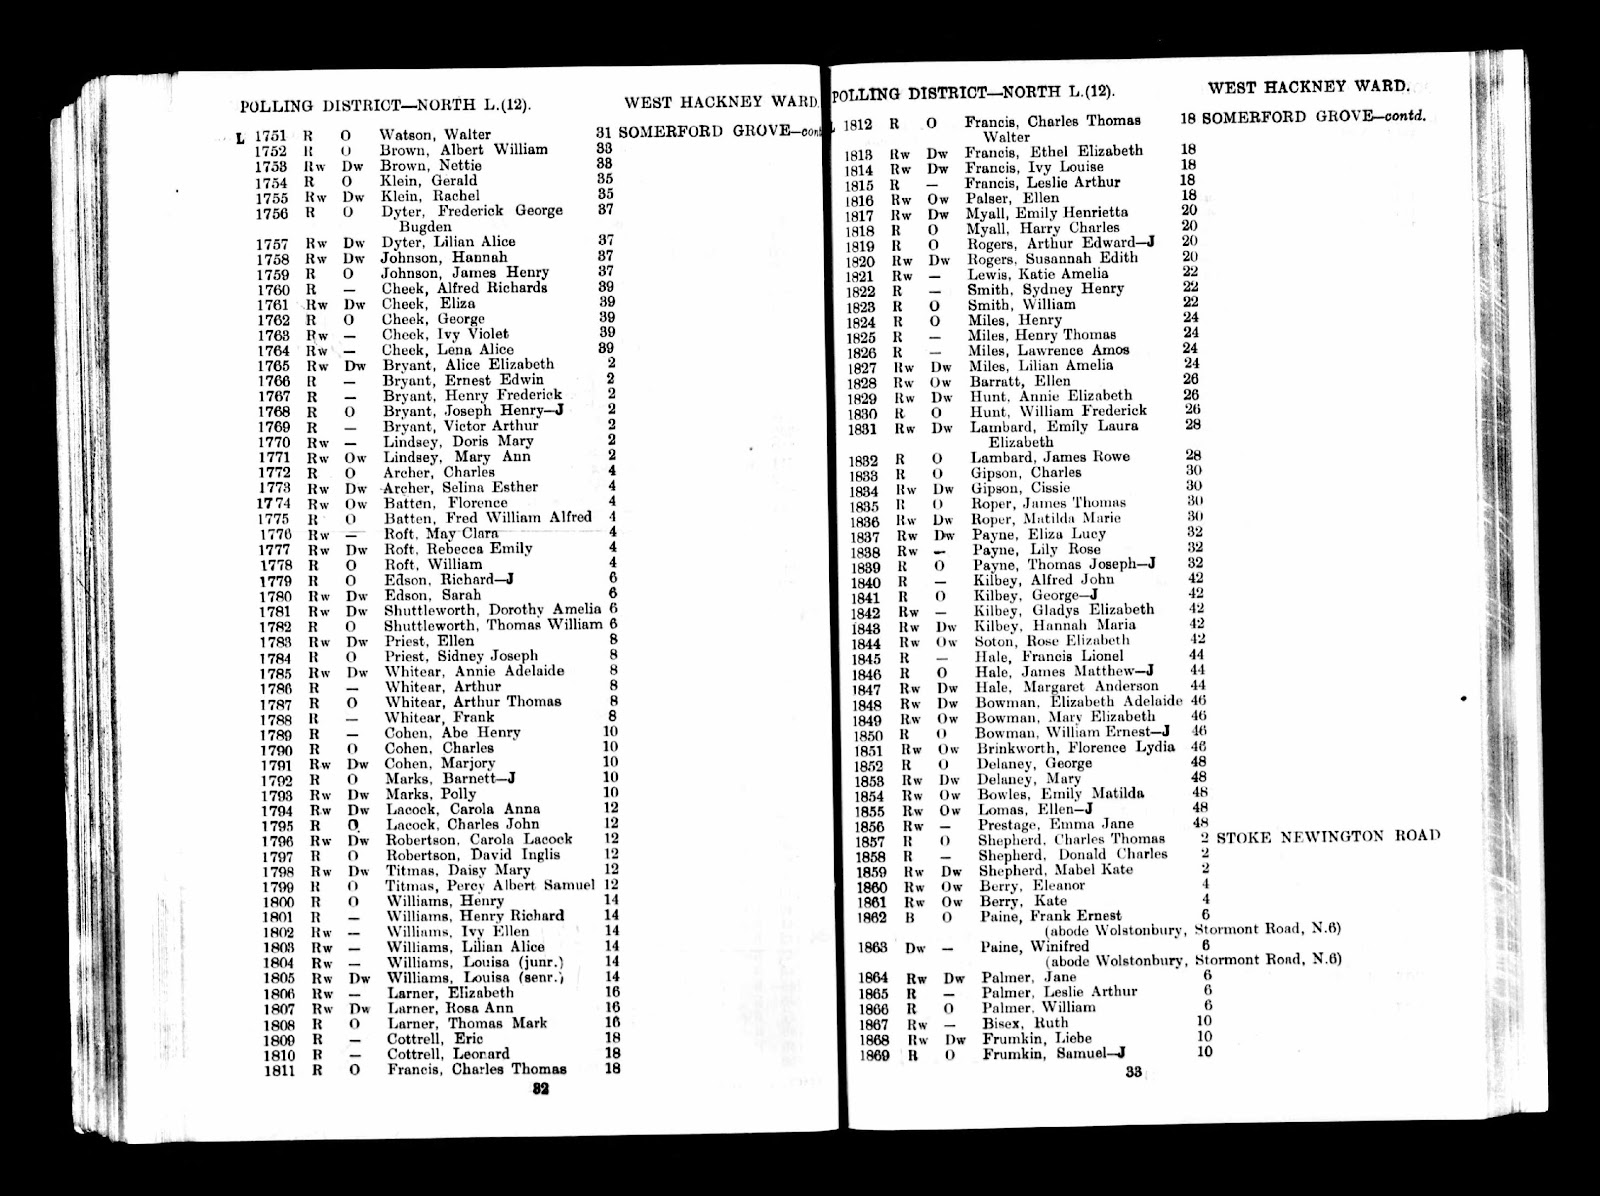 C:\Users\Main user\Documents\Ancestry\Dadaji\Lawrence Electoral\Lawrence Miles Electoral Register 1932 Hackney Original.jpg